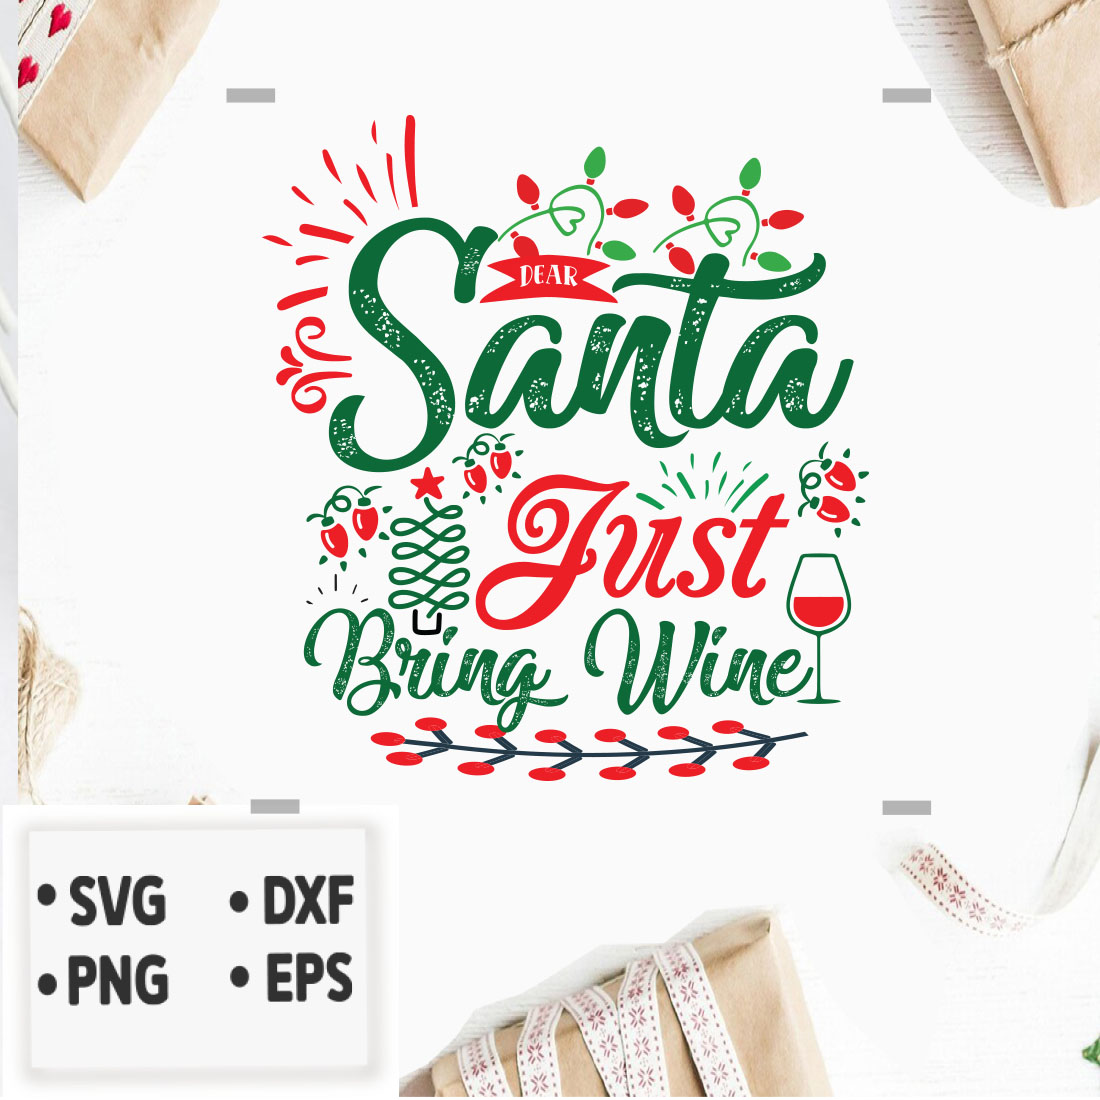 Image with wonderful print Dear Santa Just Bring Wine.